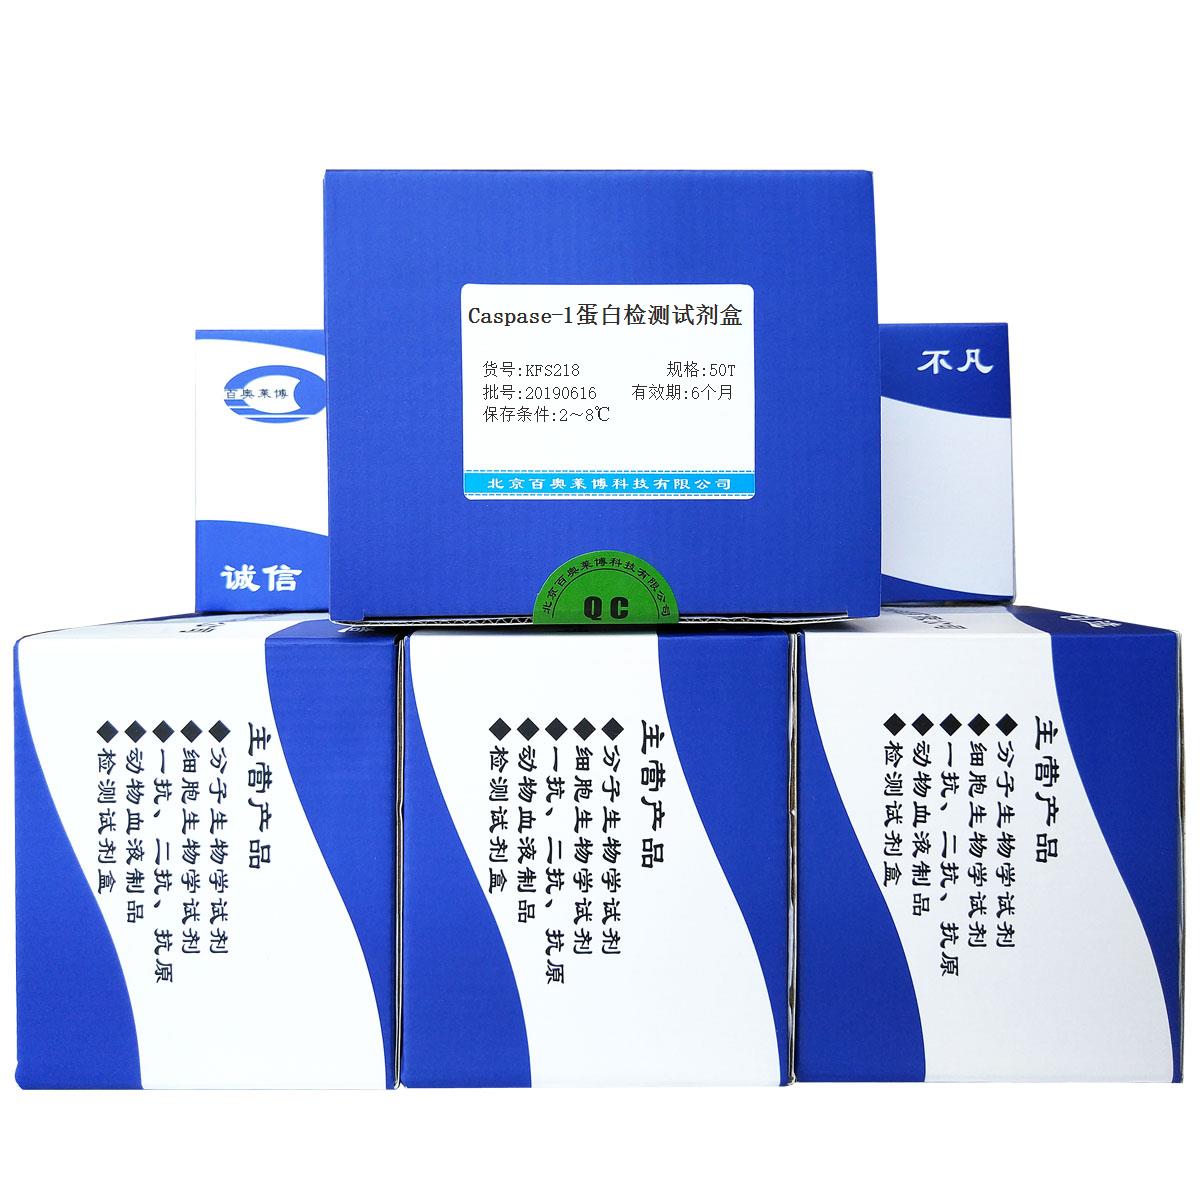 Caspase-1蛋白检测试剂盒北京现货